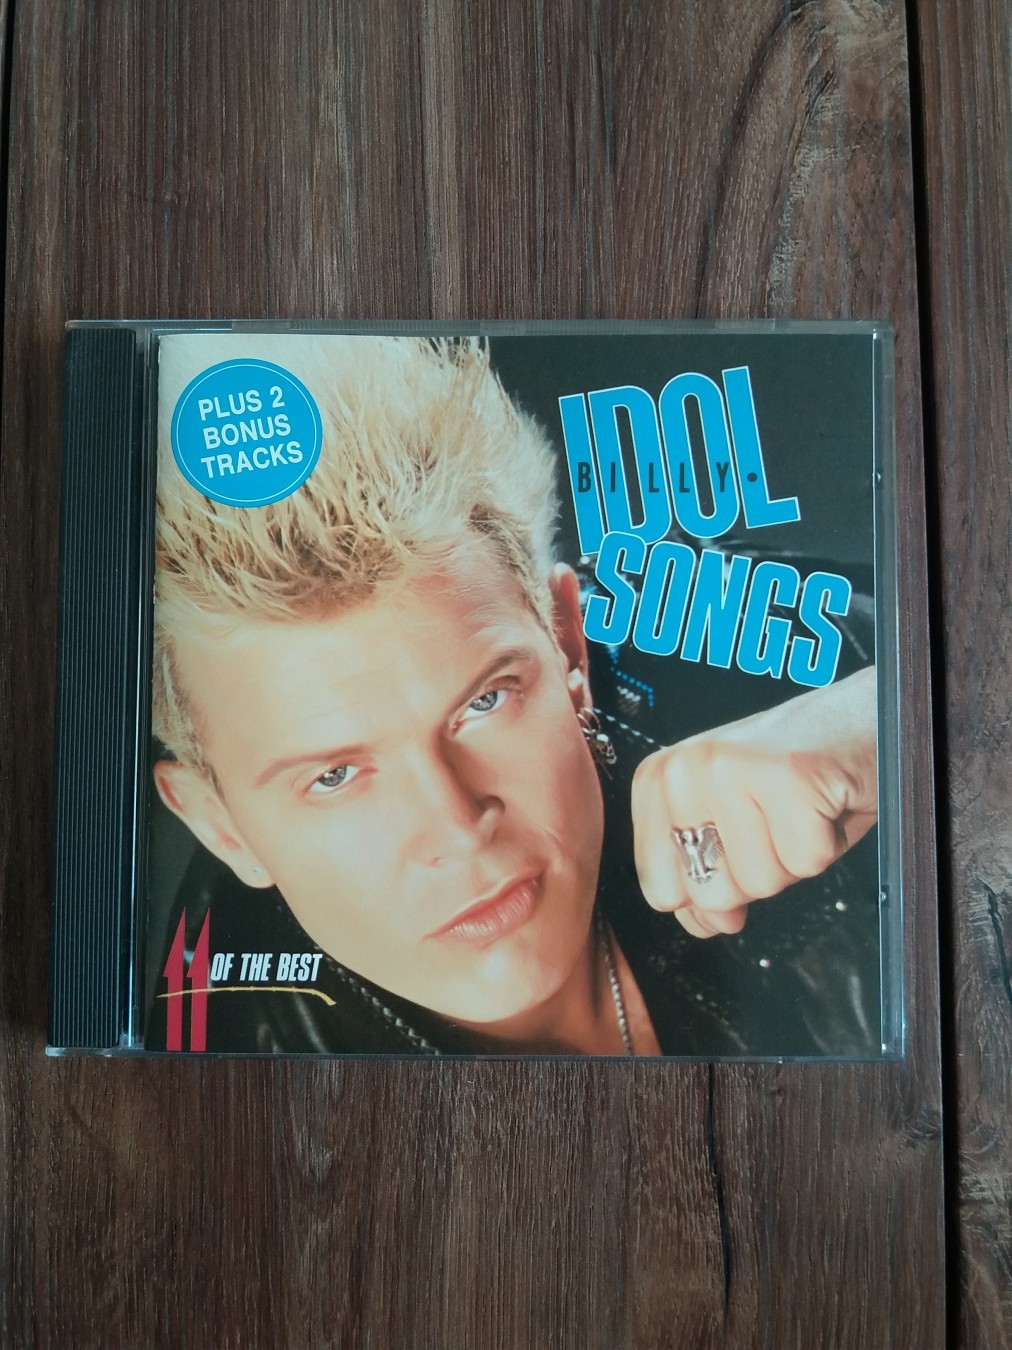 Billy Idol - Idol Songs 11 Of The Best + Bonus - Kupindo.com (74185309)